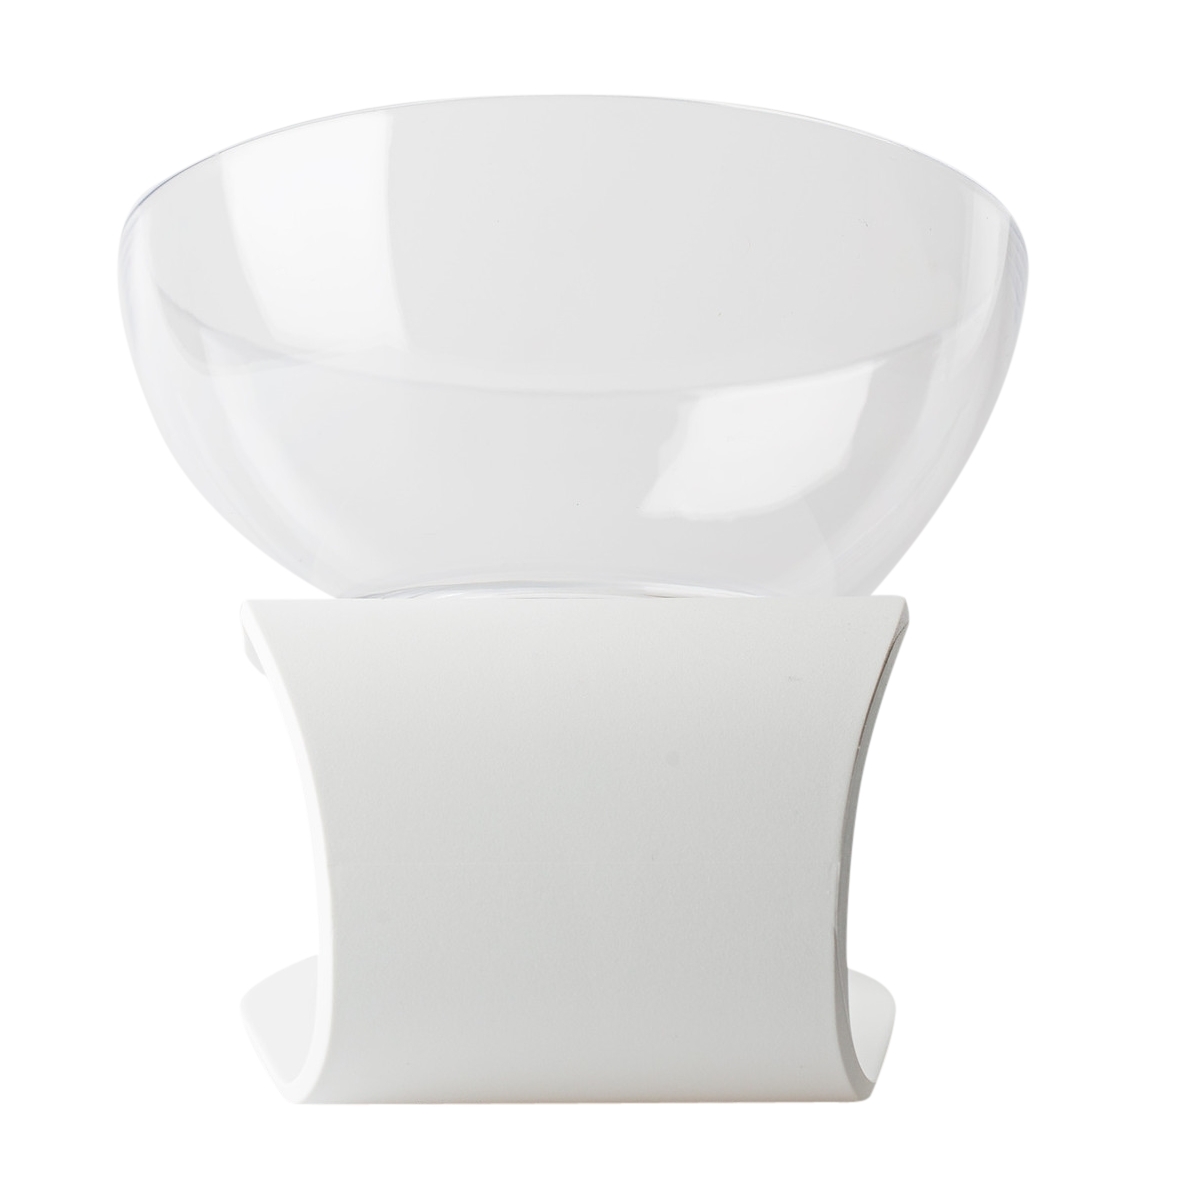 Pidan Designer Raised Cat Bowl with White Base image 3